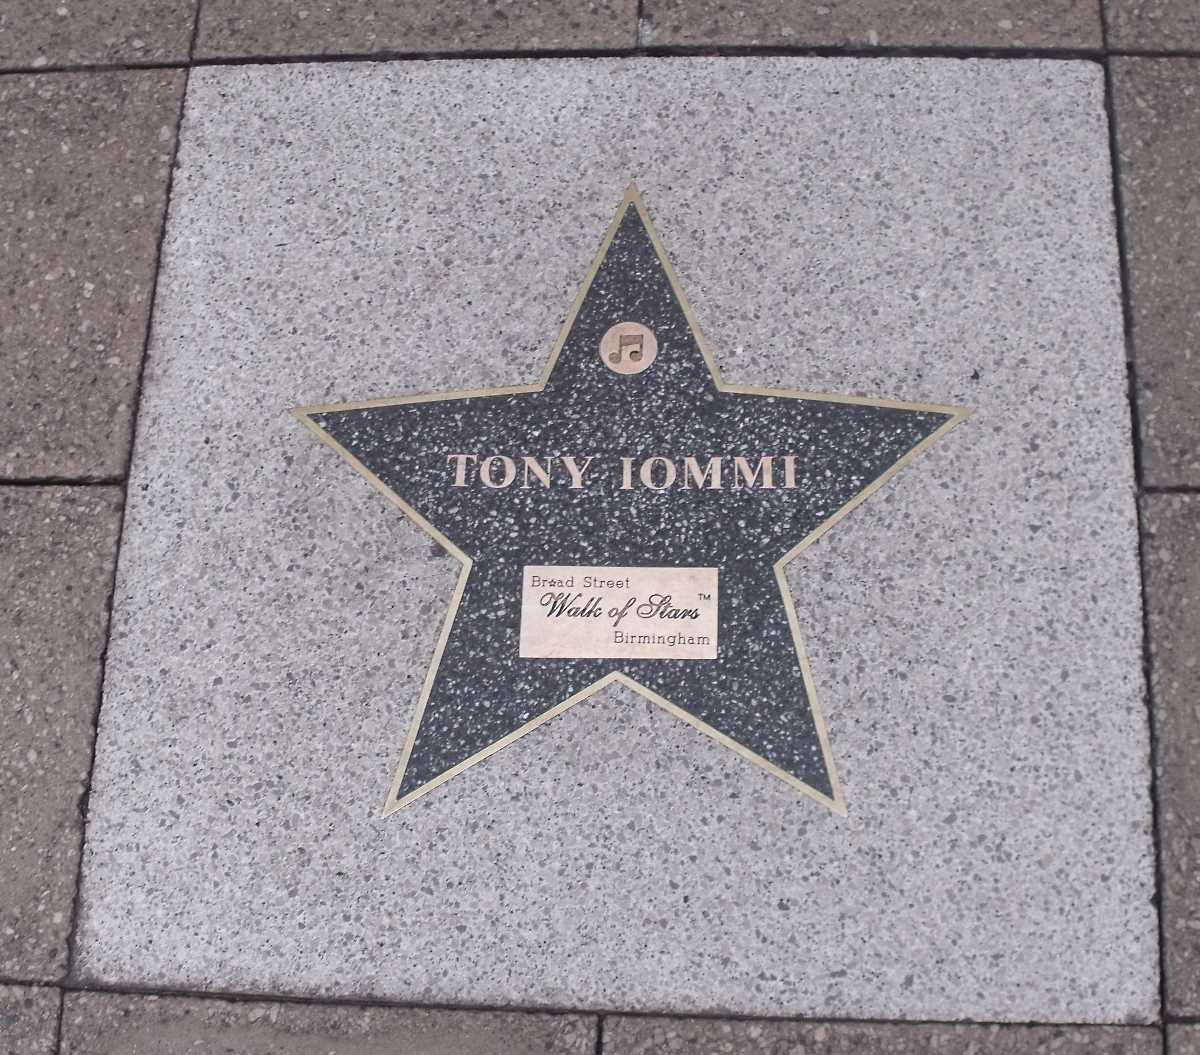 Tony Iomii